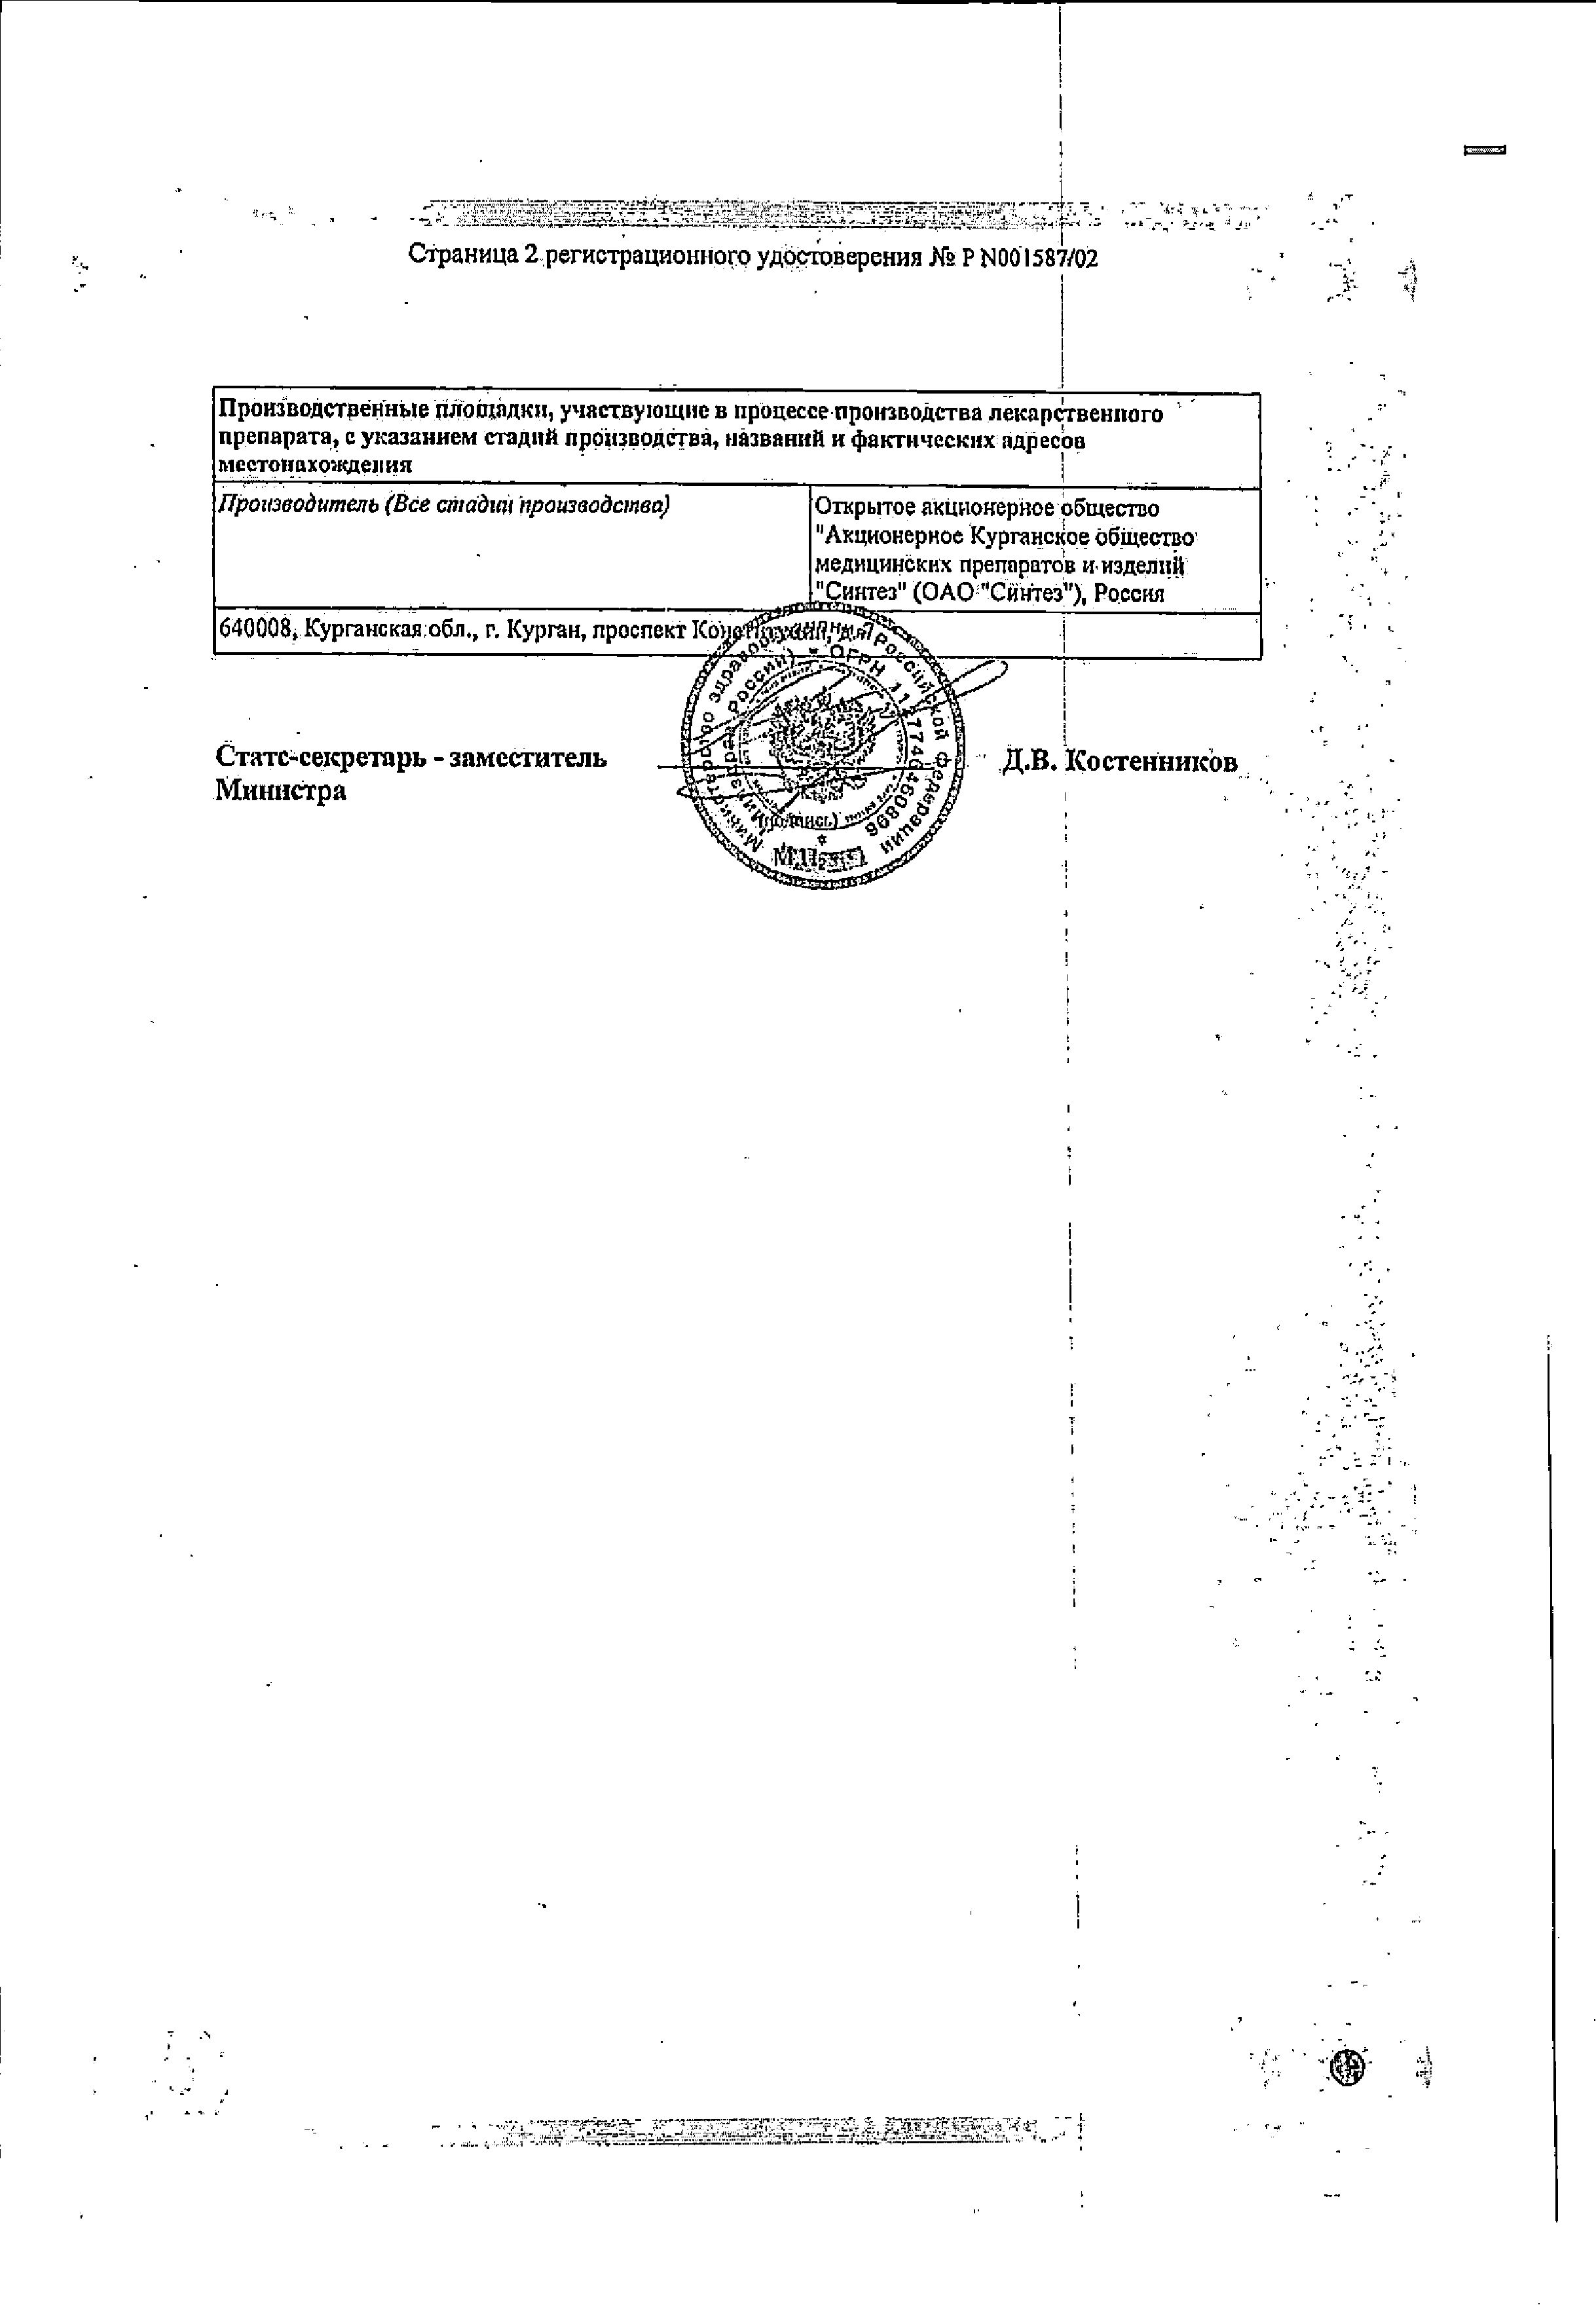 Ципрофлоксацин-АКОС сертификат